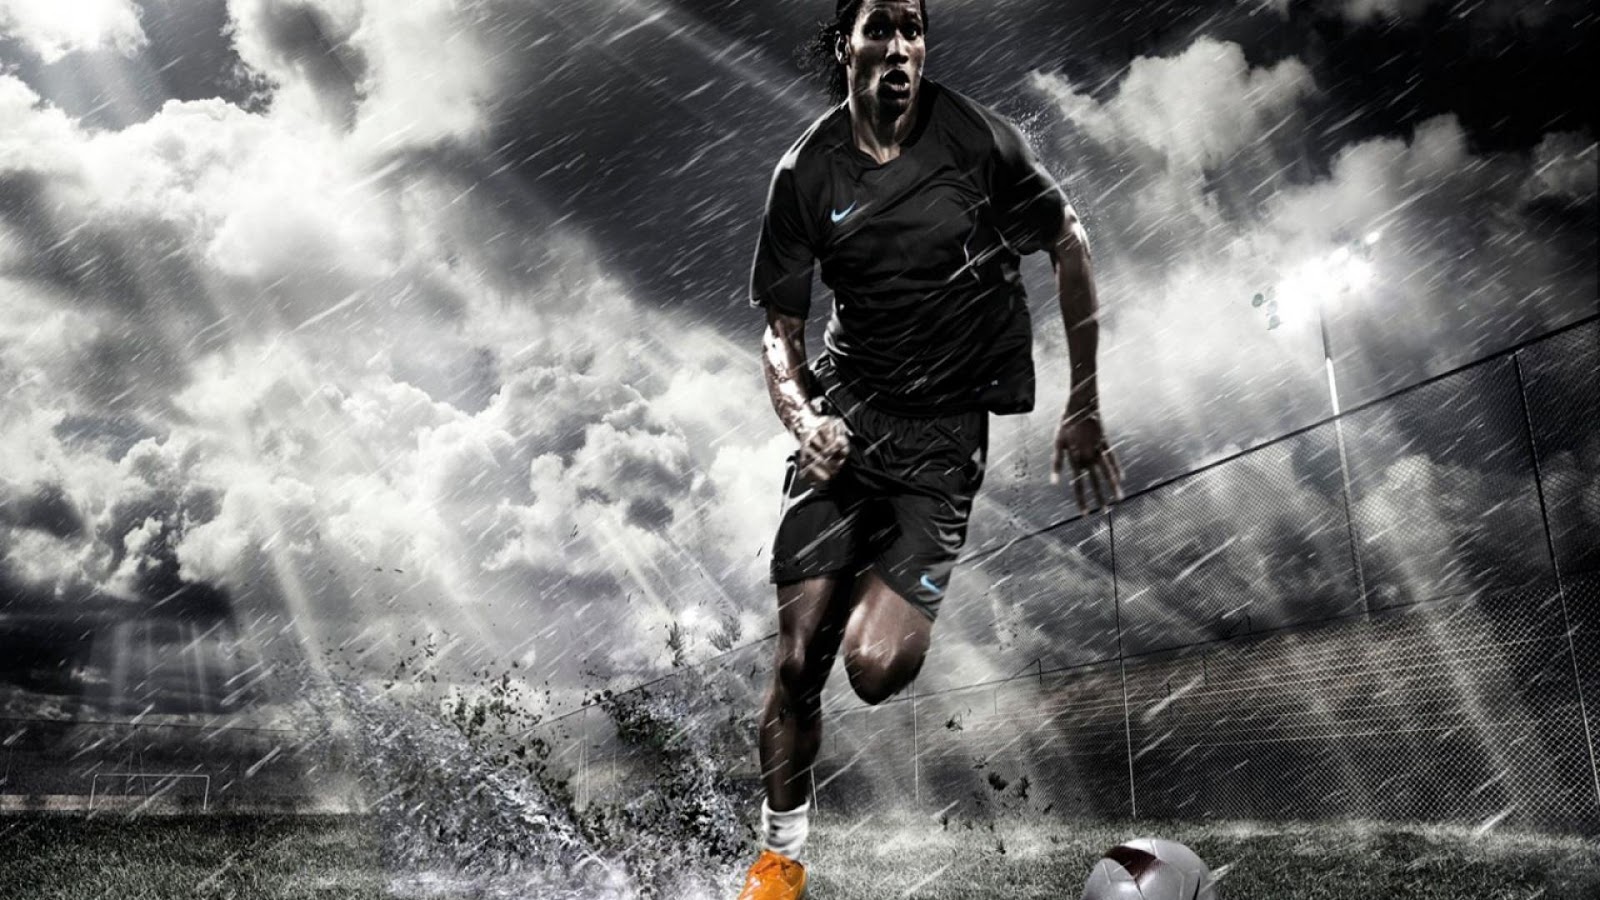 Didier Drogba Chelsea Wallpaper Football HD